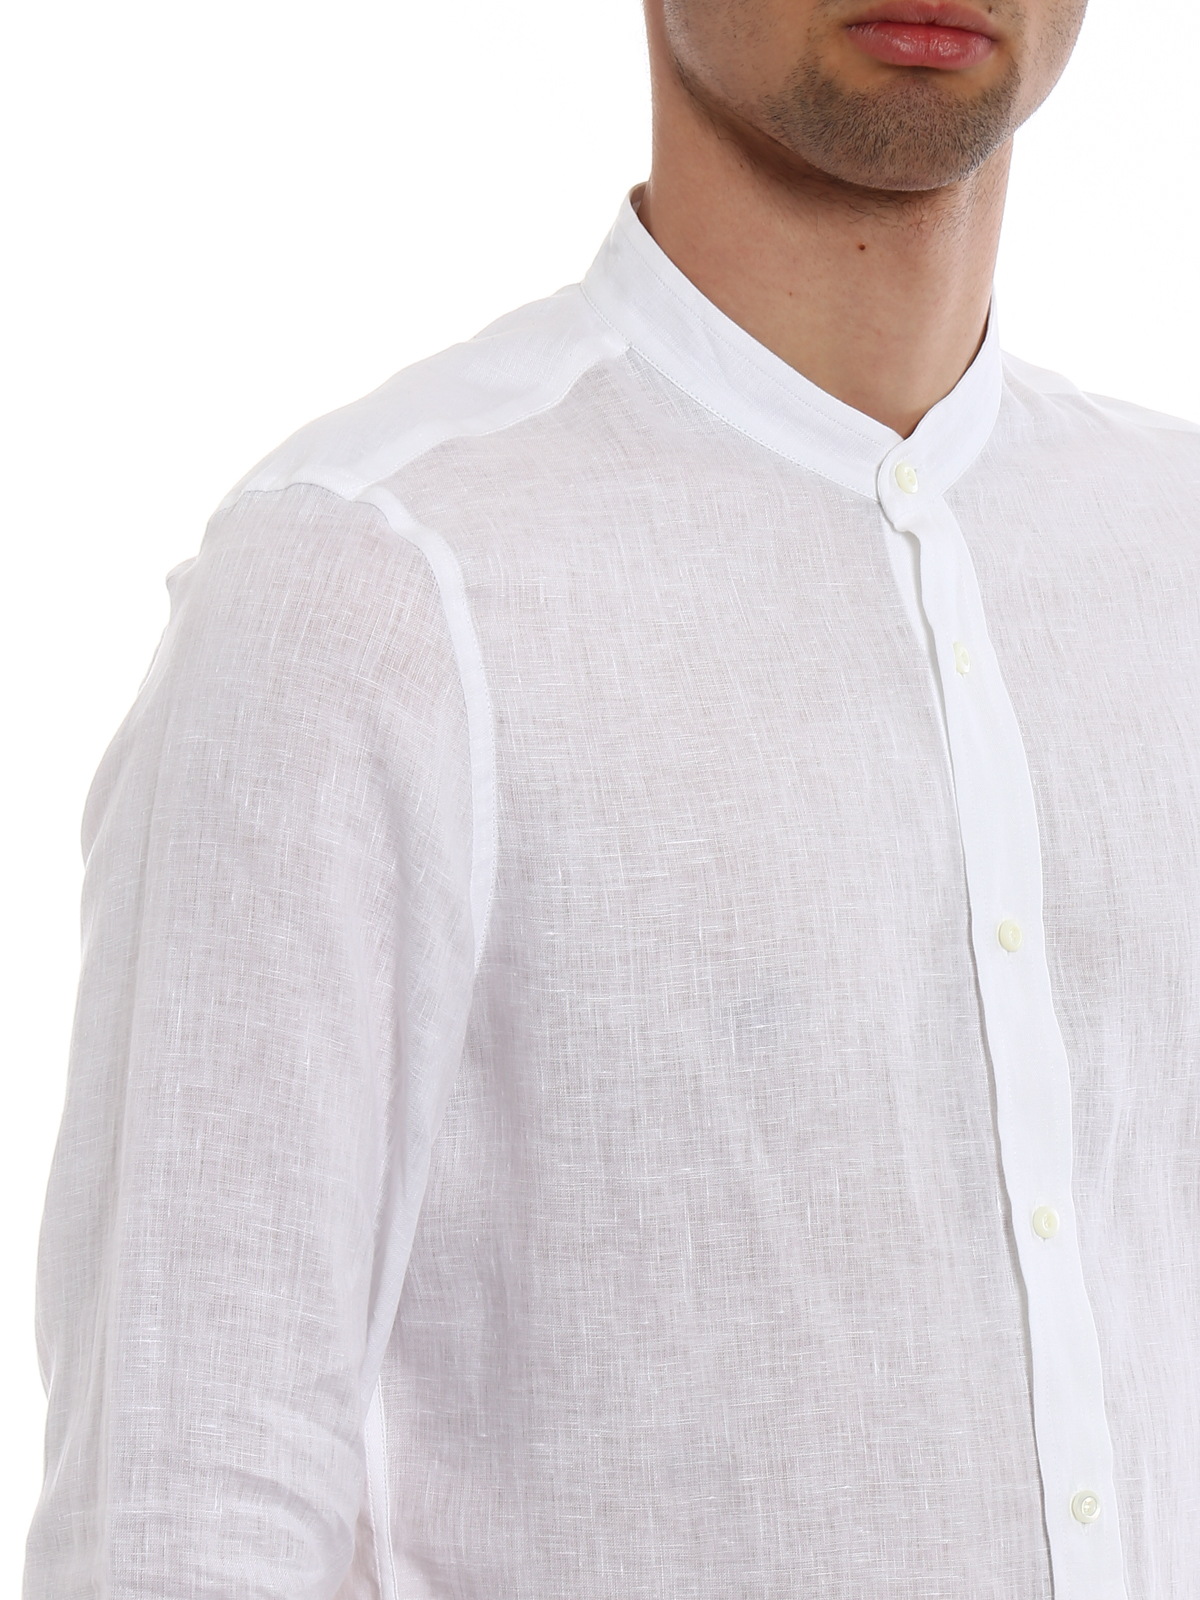 Shirts Brunello Cucinelli - Pure linen light white shirt - MB6503048C159